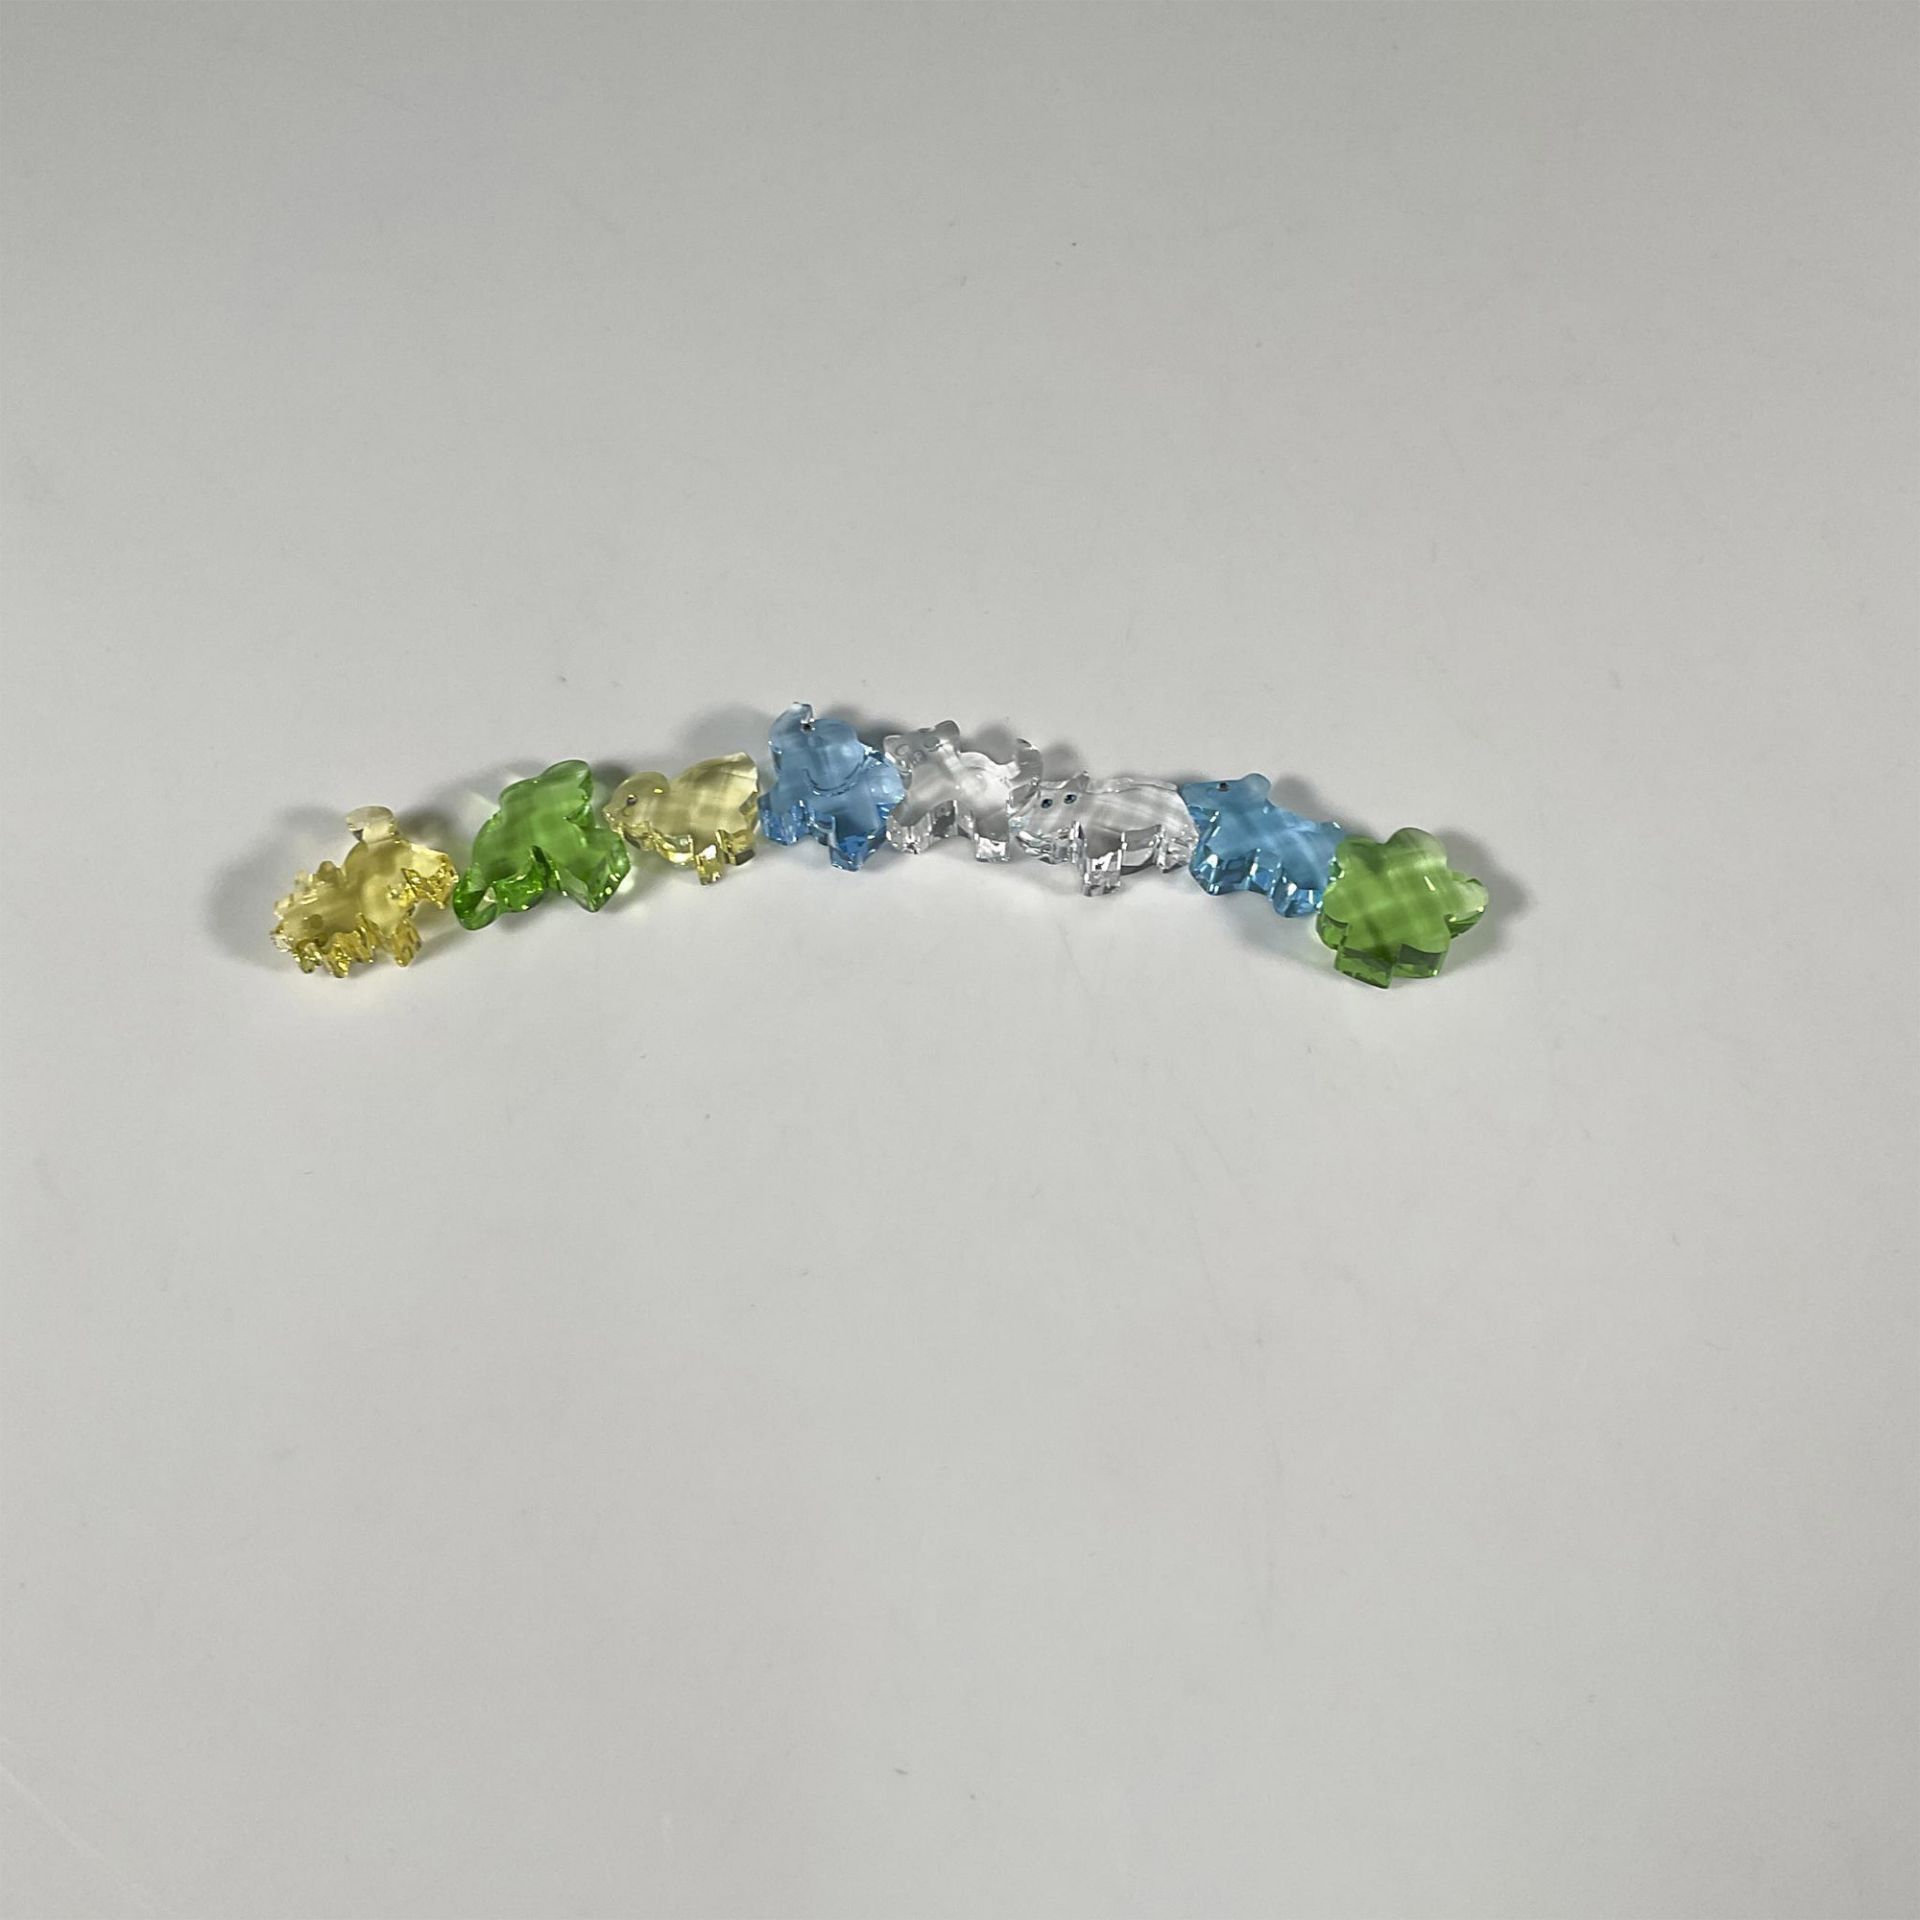 8pc Swarovski Crystal Mini Figurines Set - Image 6 of 6